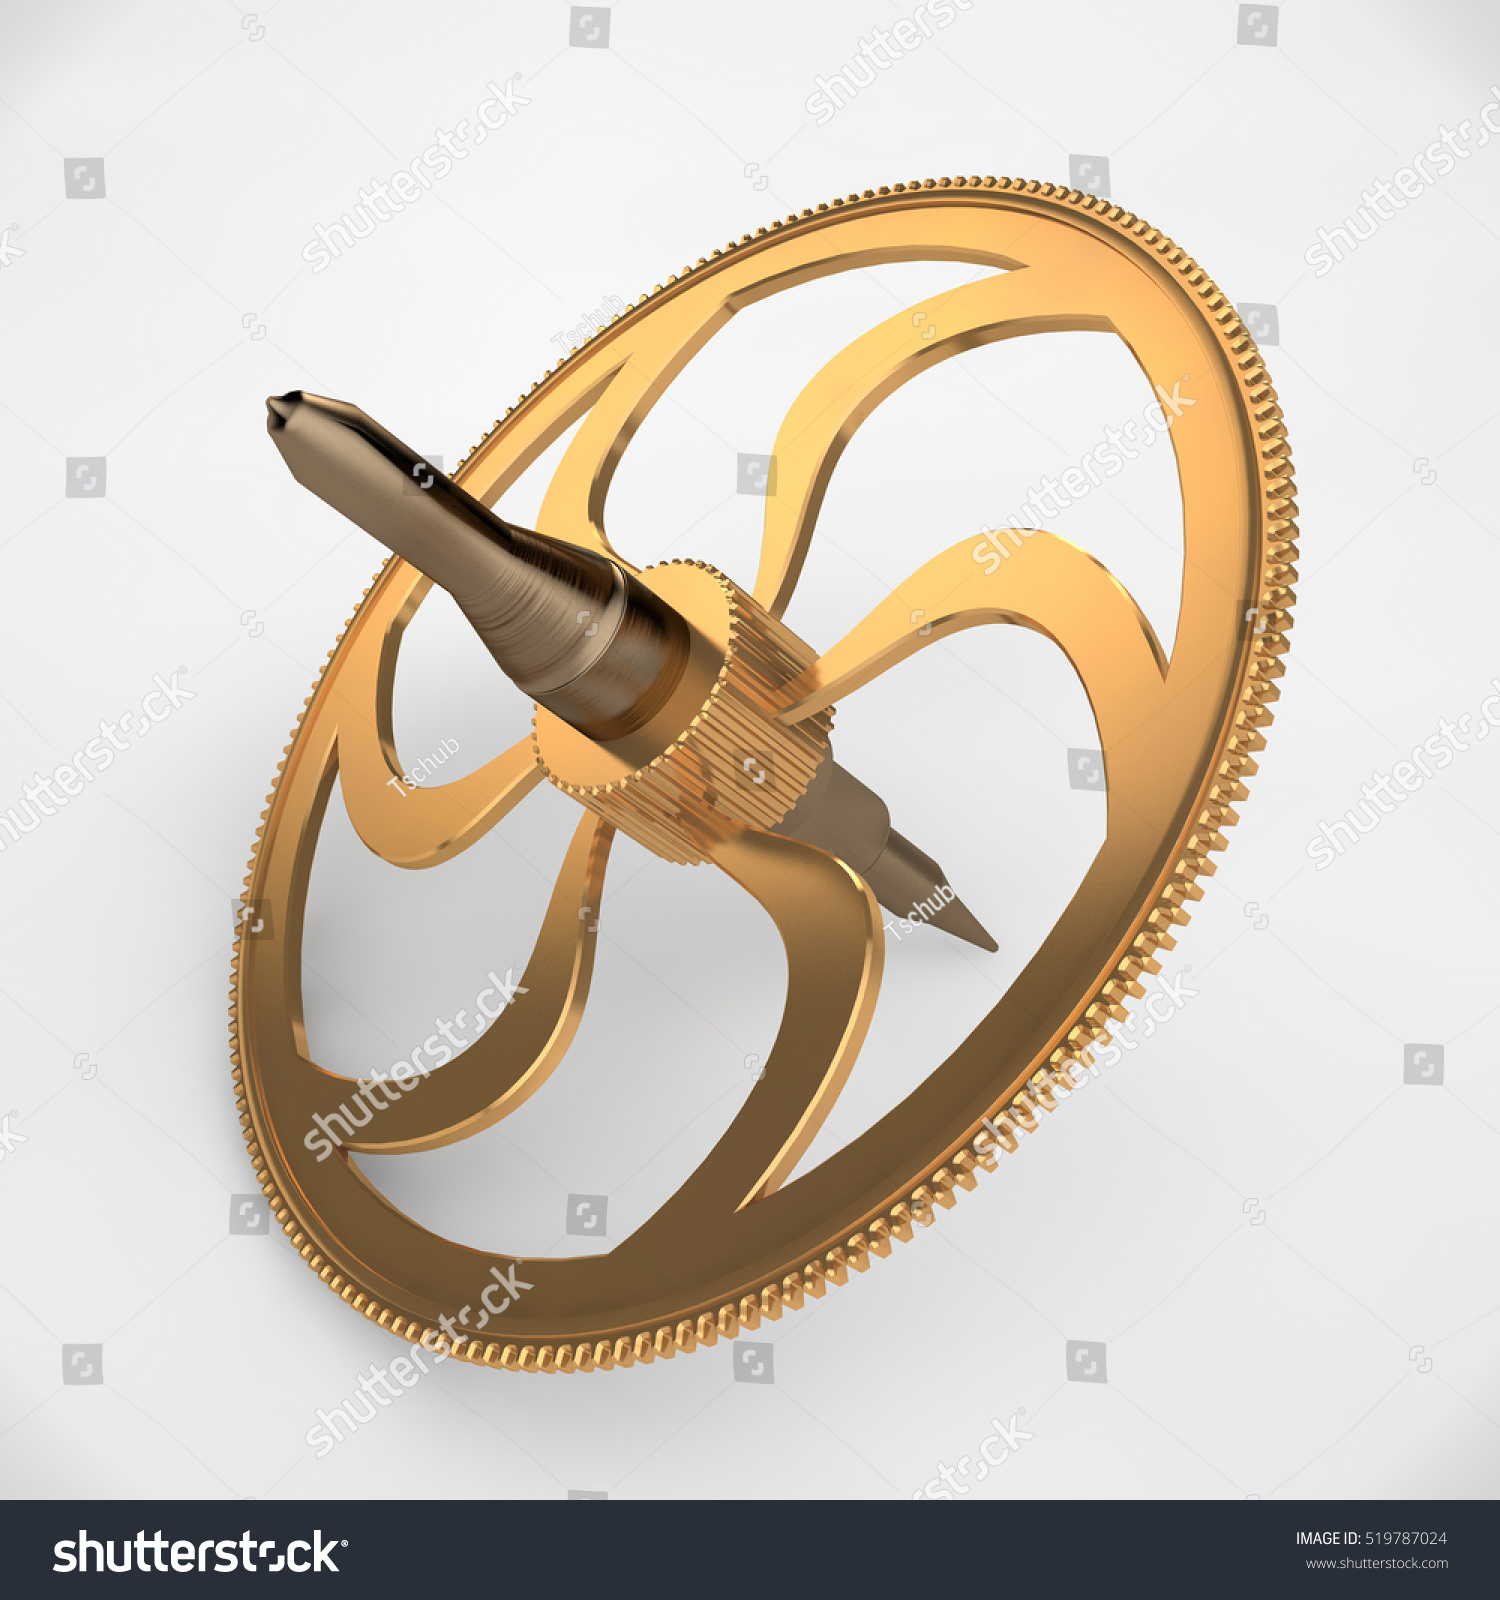 Golden Gear Staying Gyroscope Image On Stock Illustration 519787024 Shutterstock 6397